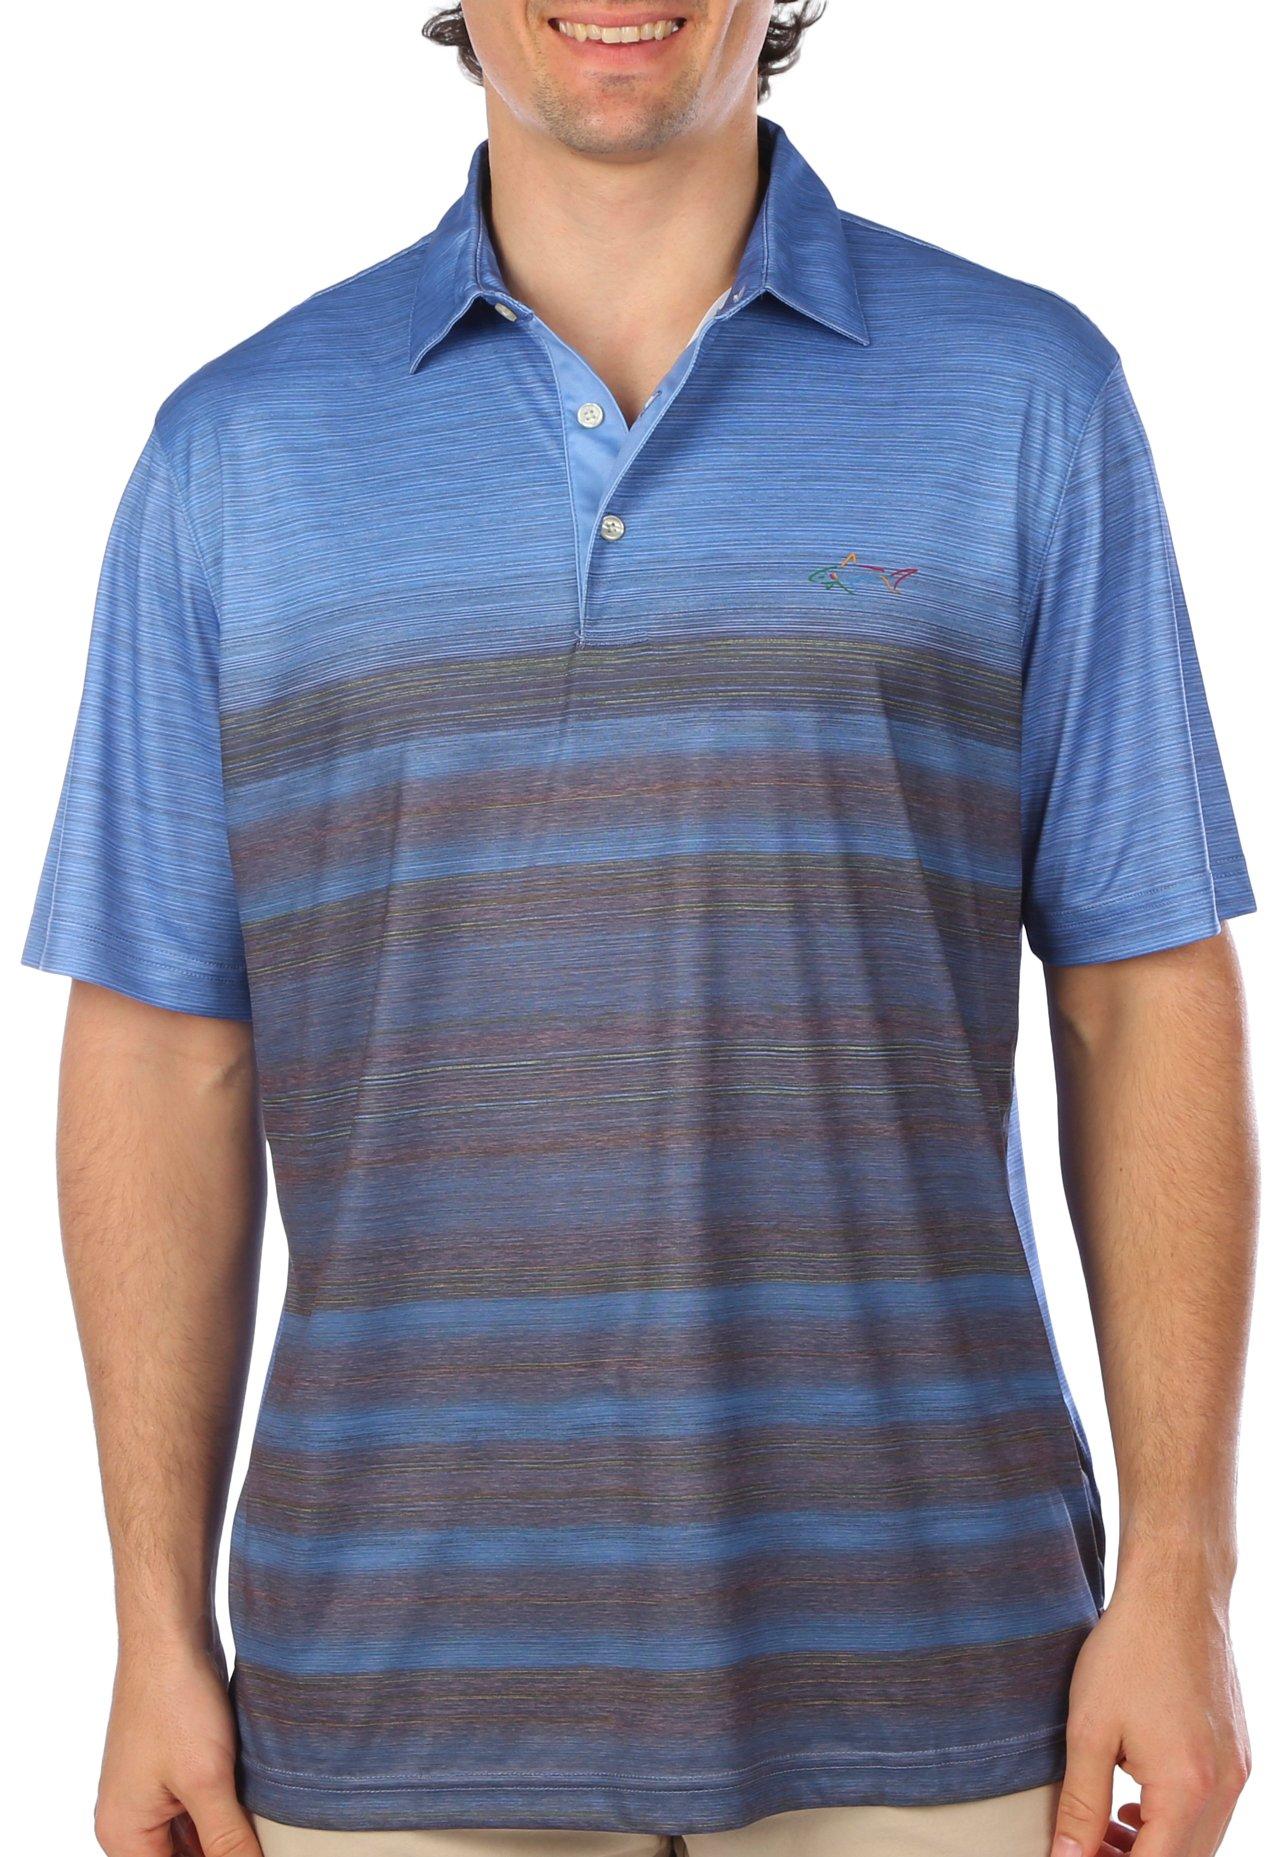 Greg Norman Mens Polo Shirt